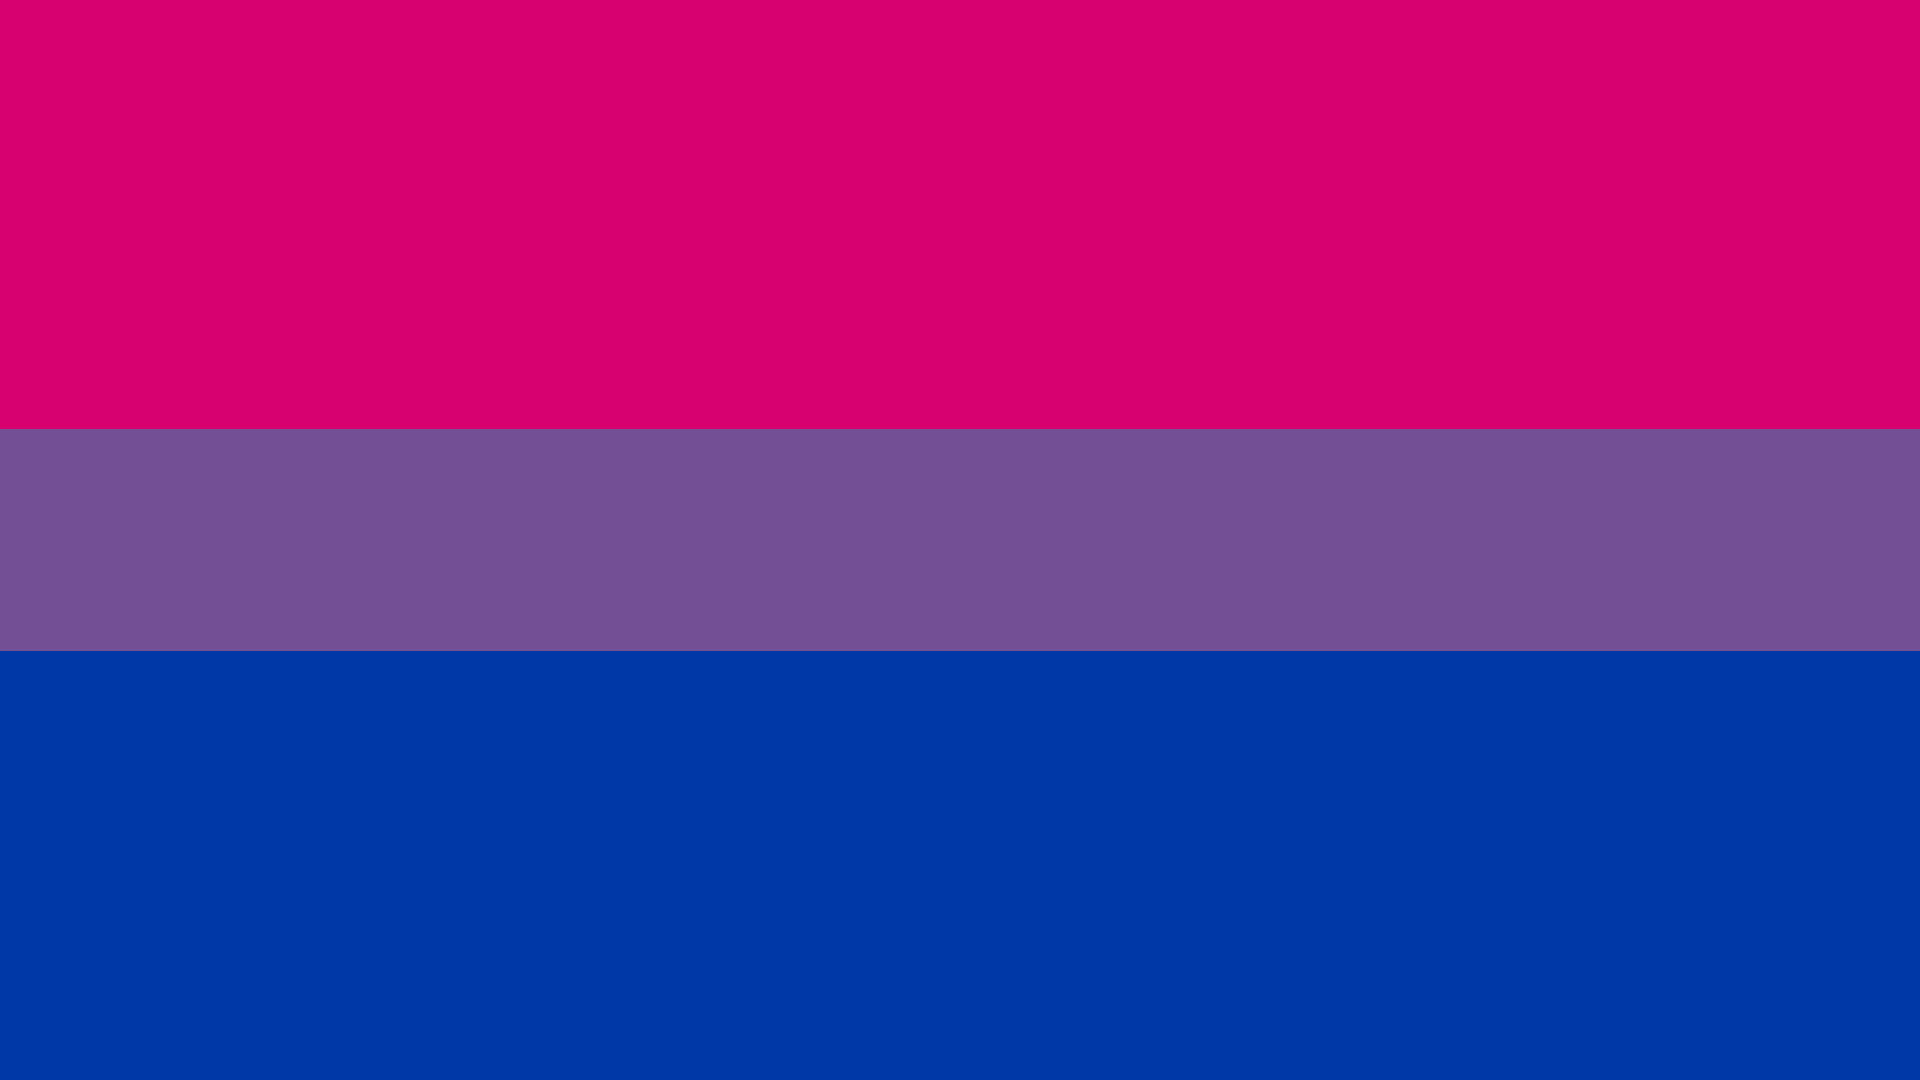 Bisexual Pride Flag by NecronomiconOfGod on